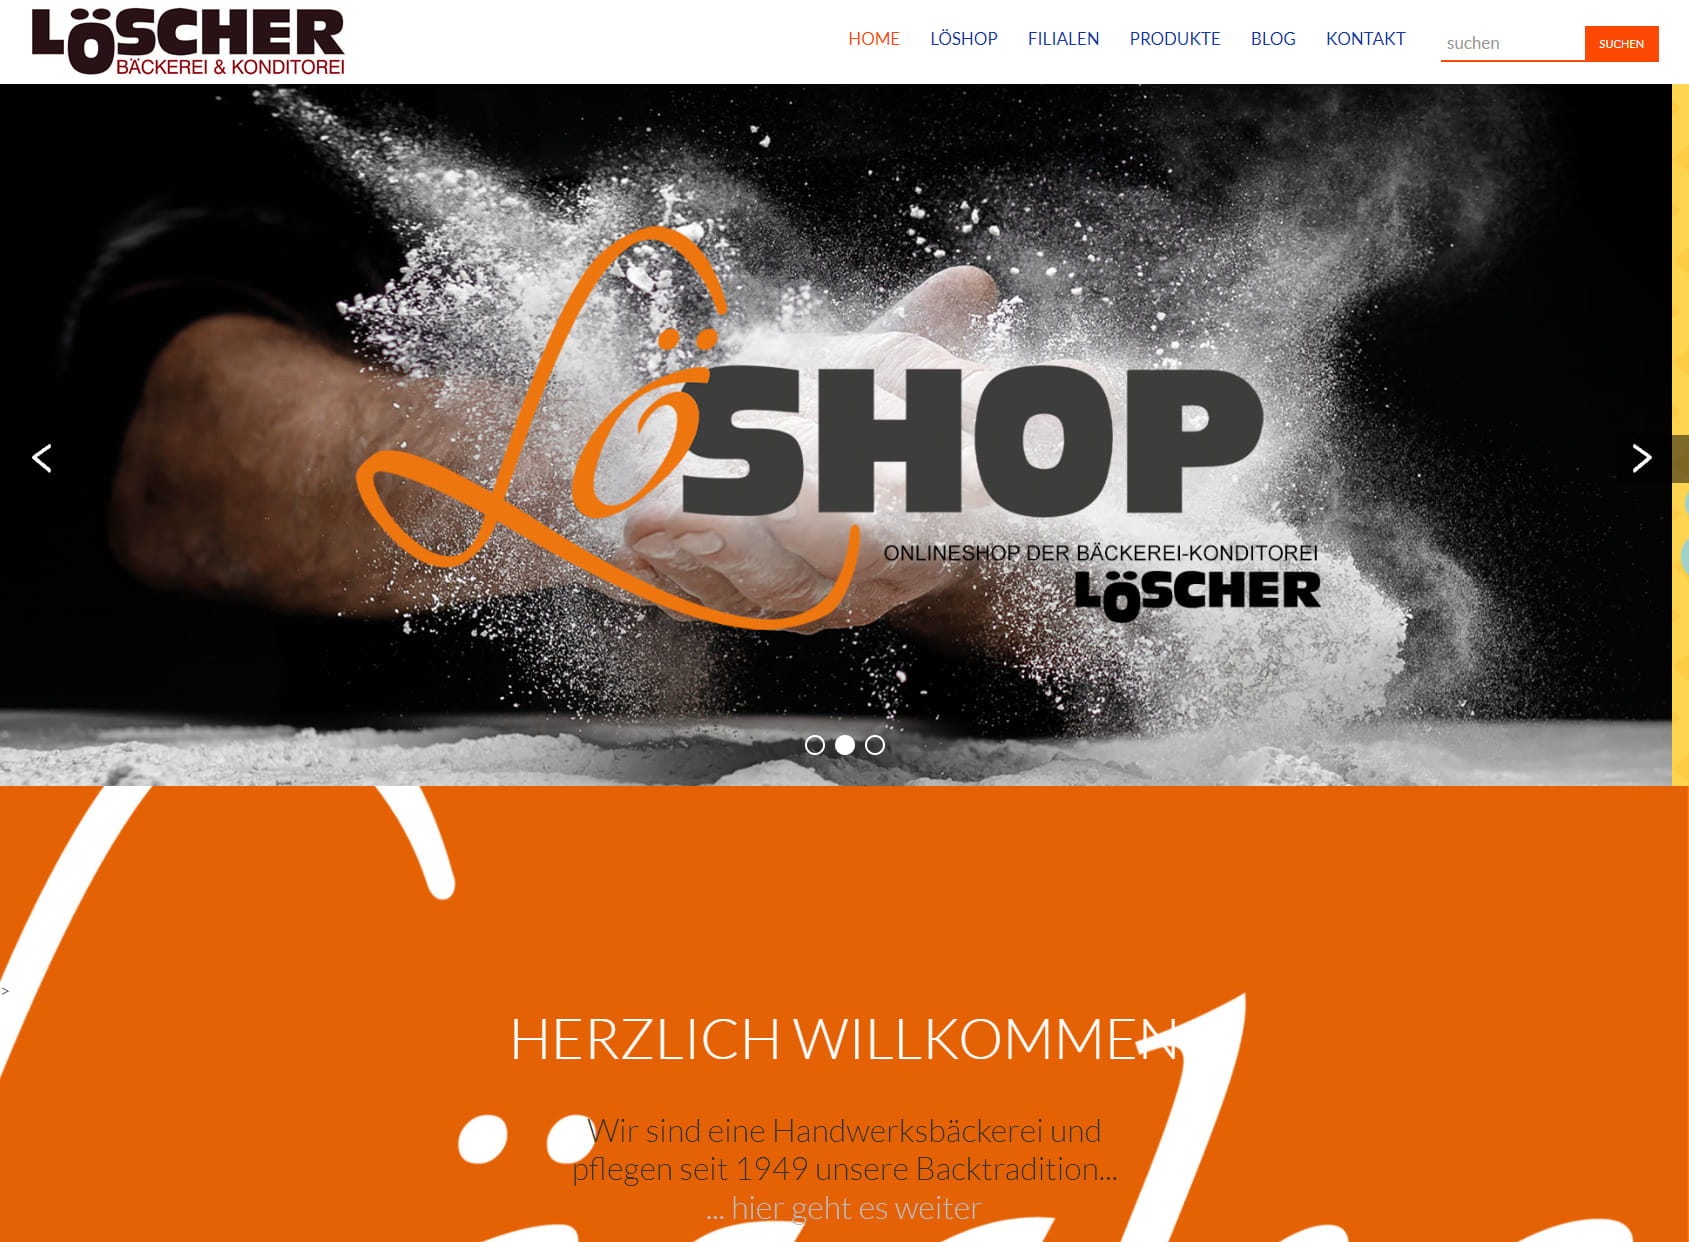 Löscher Bäckerei-Konditorei GmbH